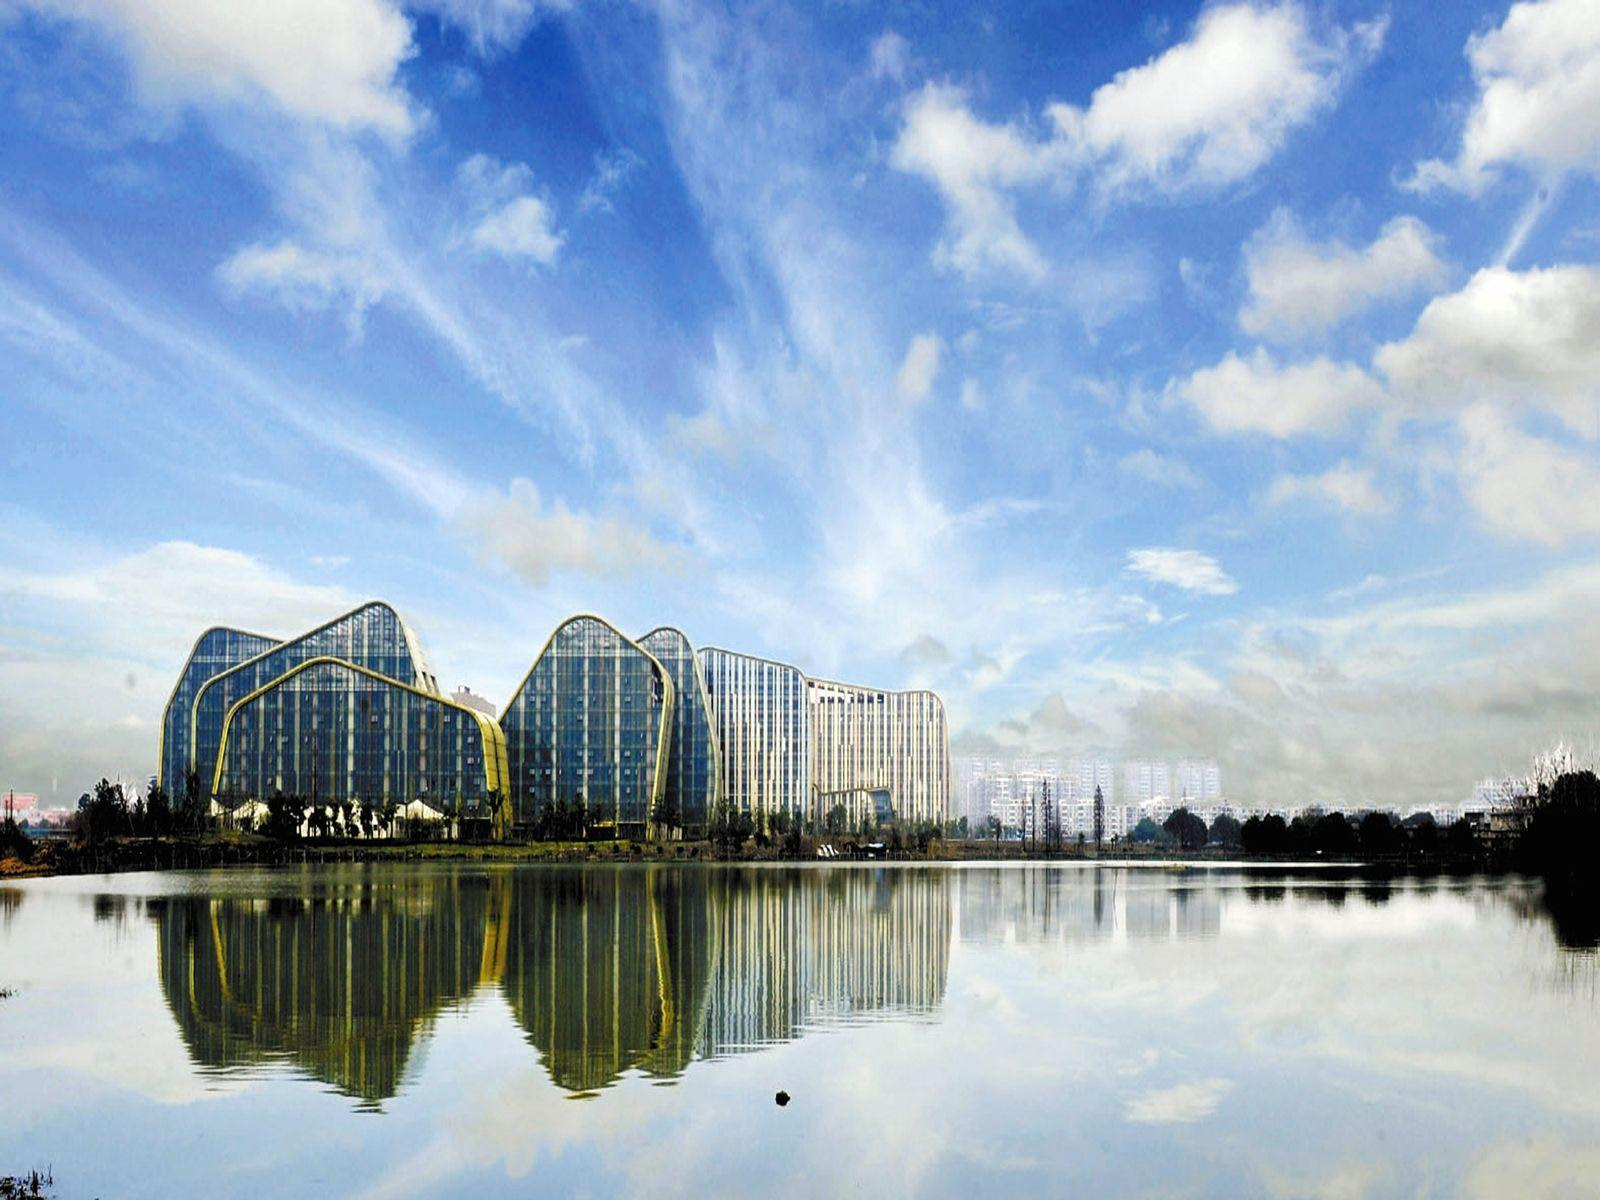 About Hangzhou White Horse Lake Jianguo Hotel